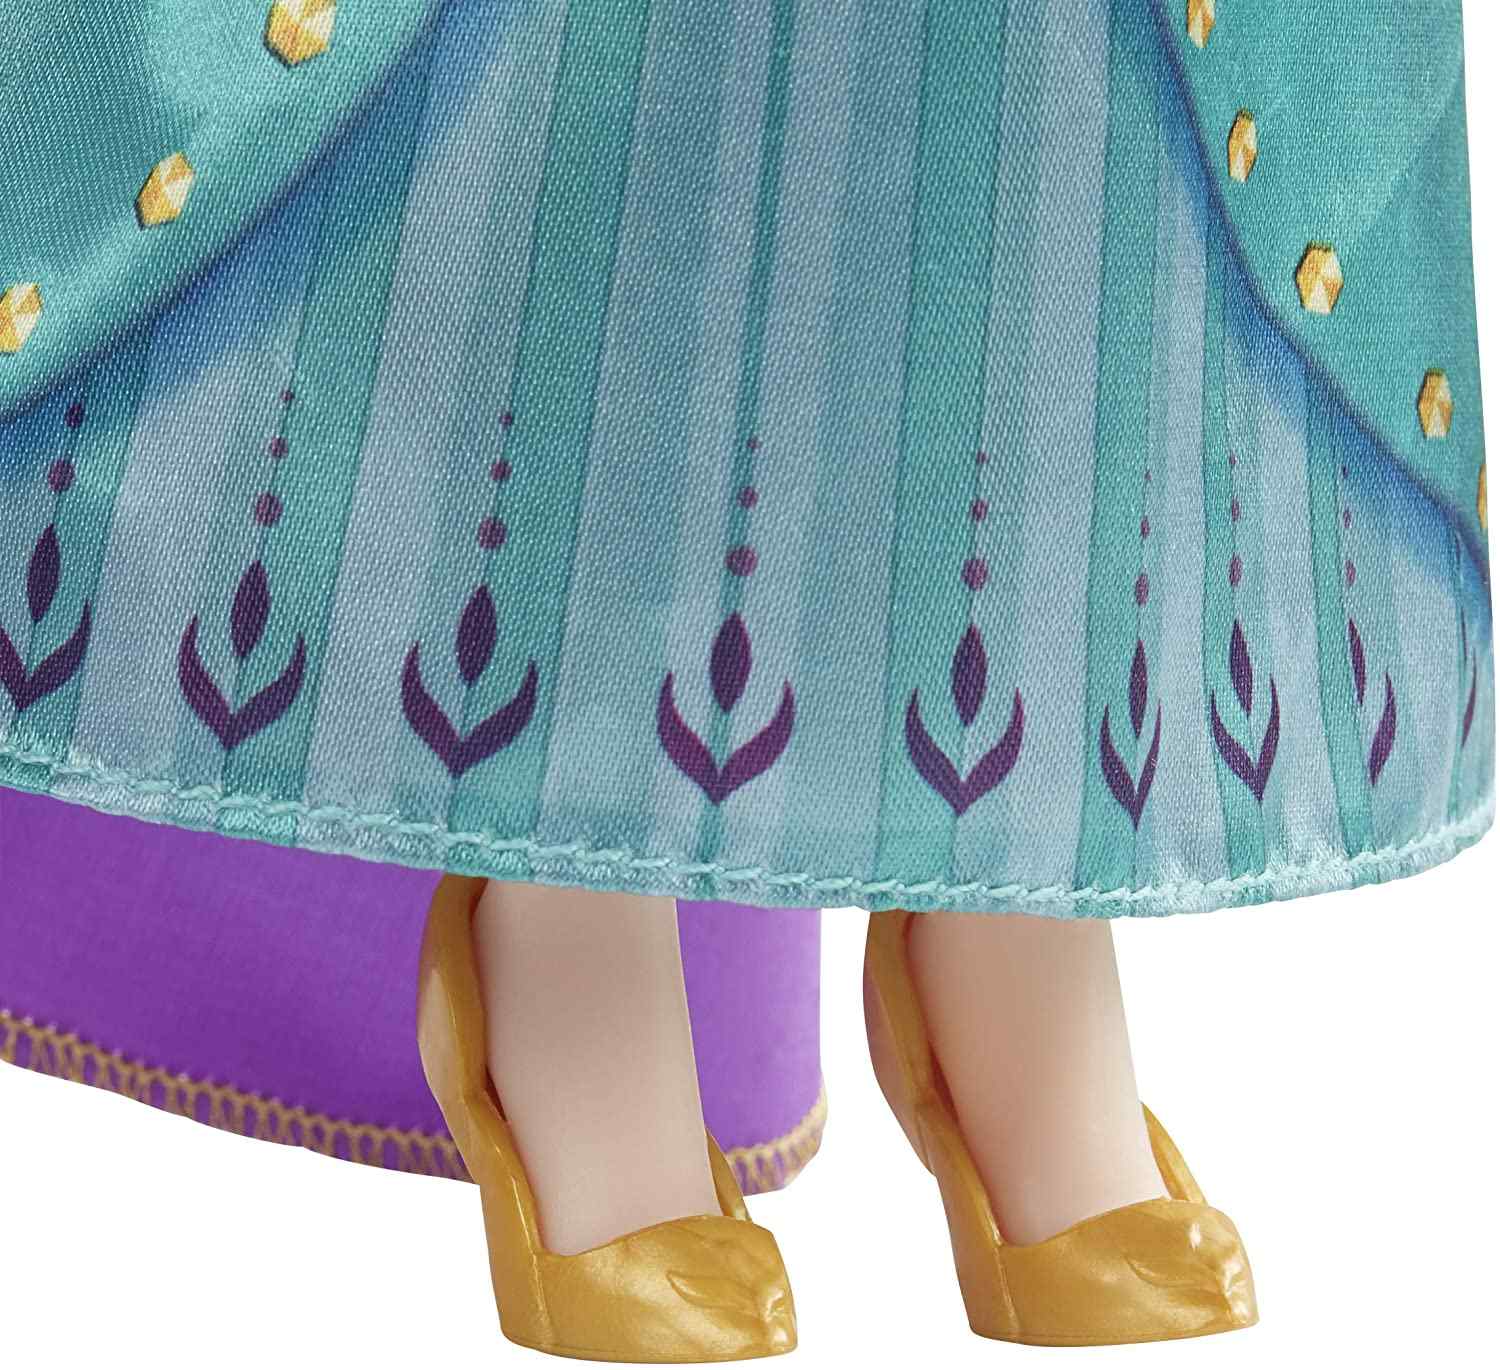 Hasbro disney frozen - regina anna fashion doll - Disney Frozen, DISNEY PRINCESS